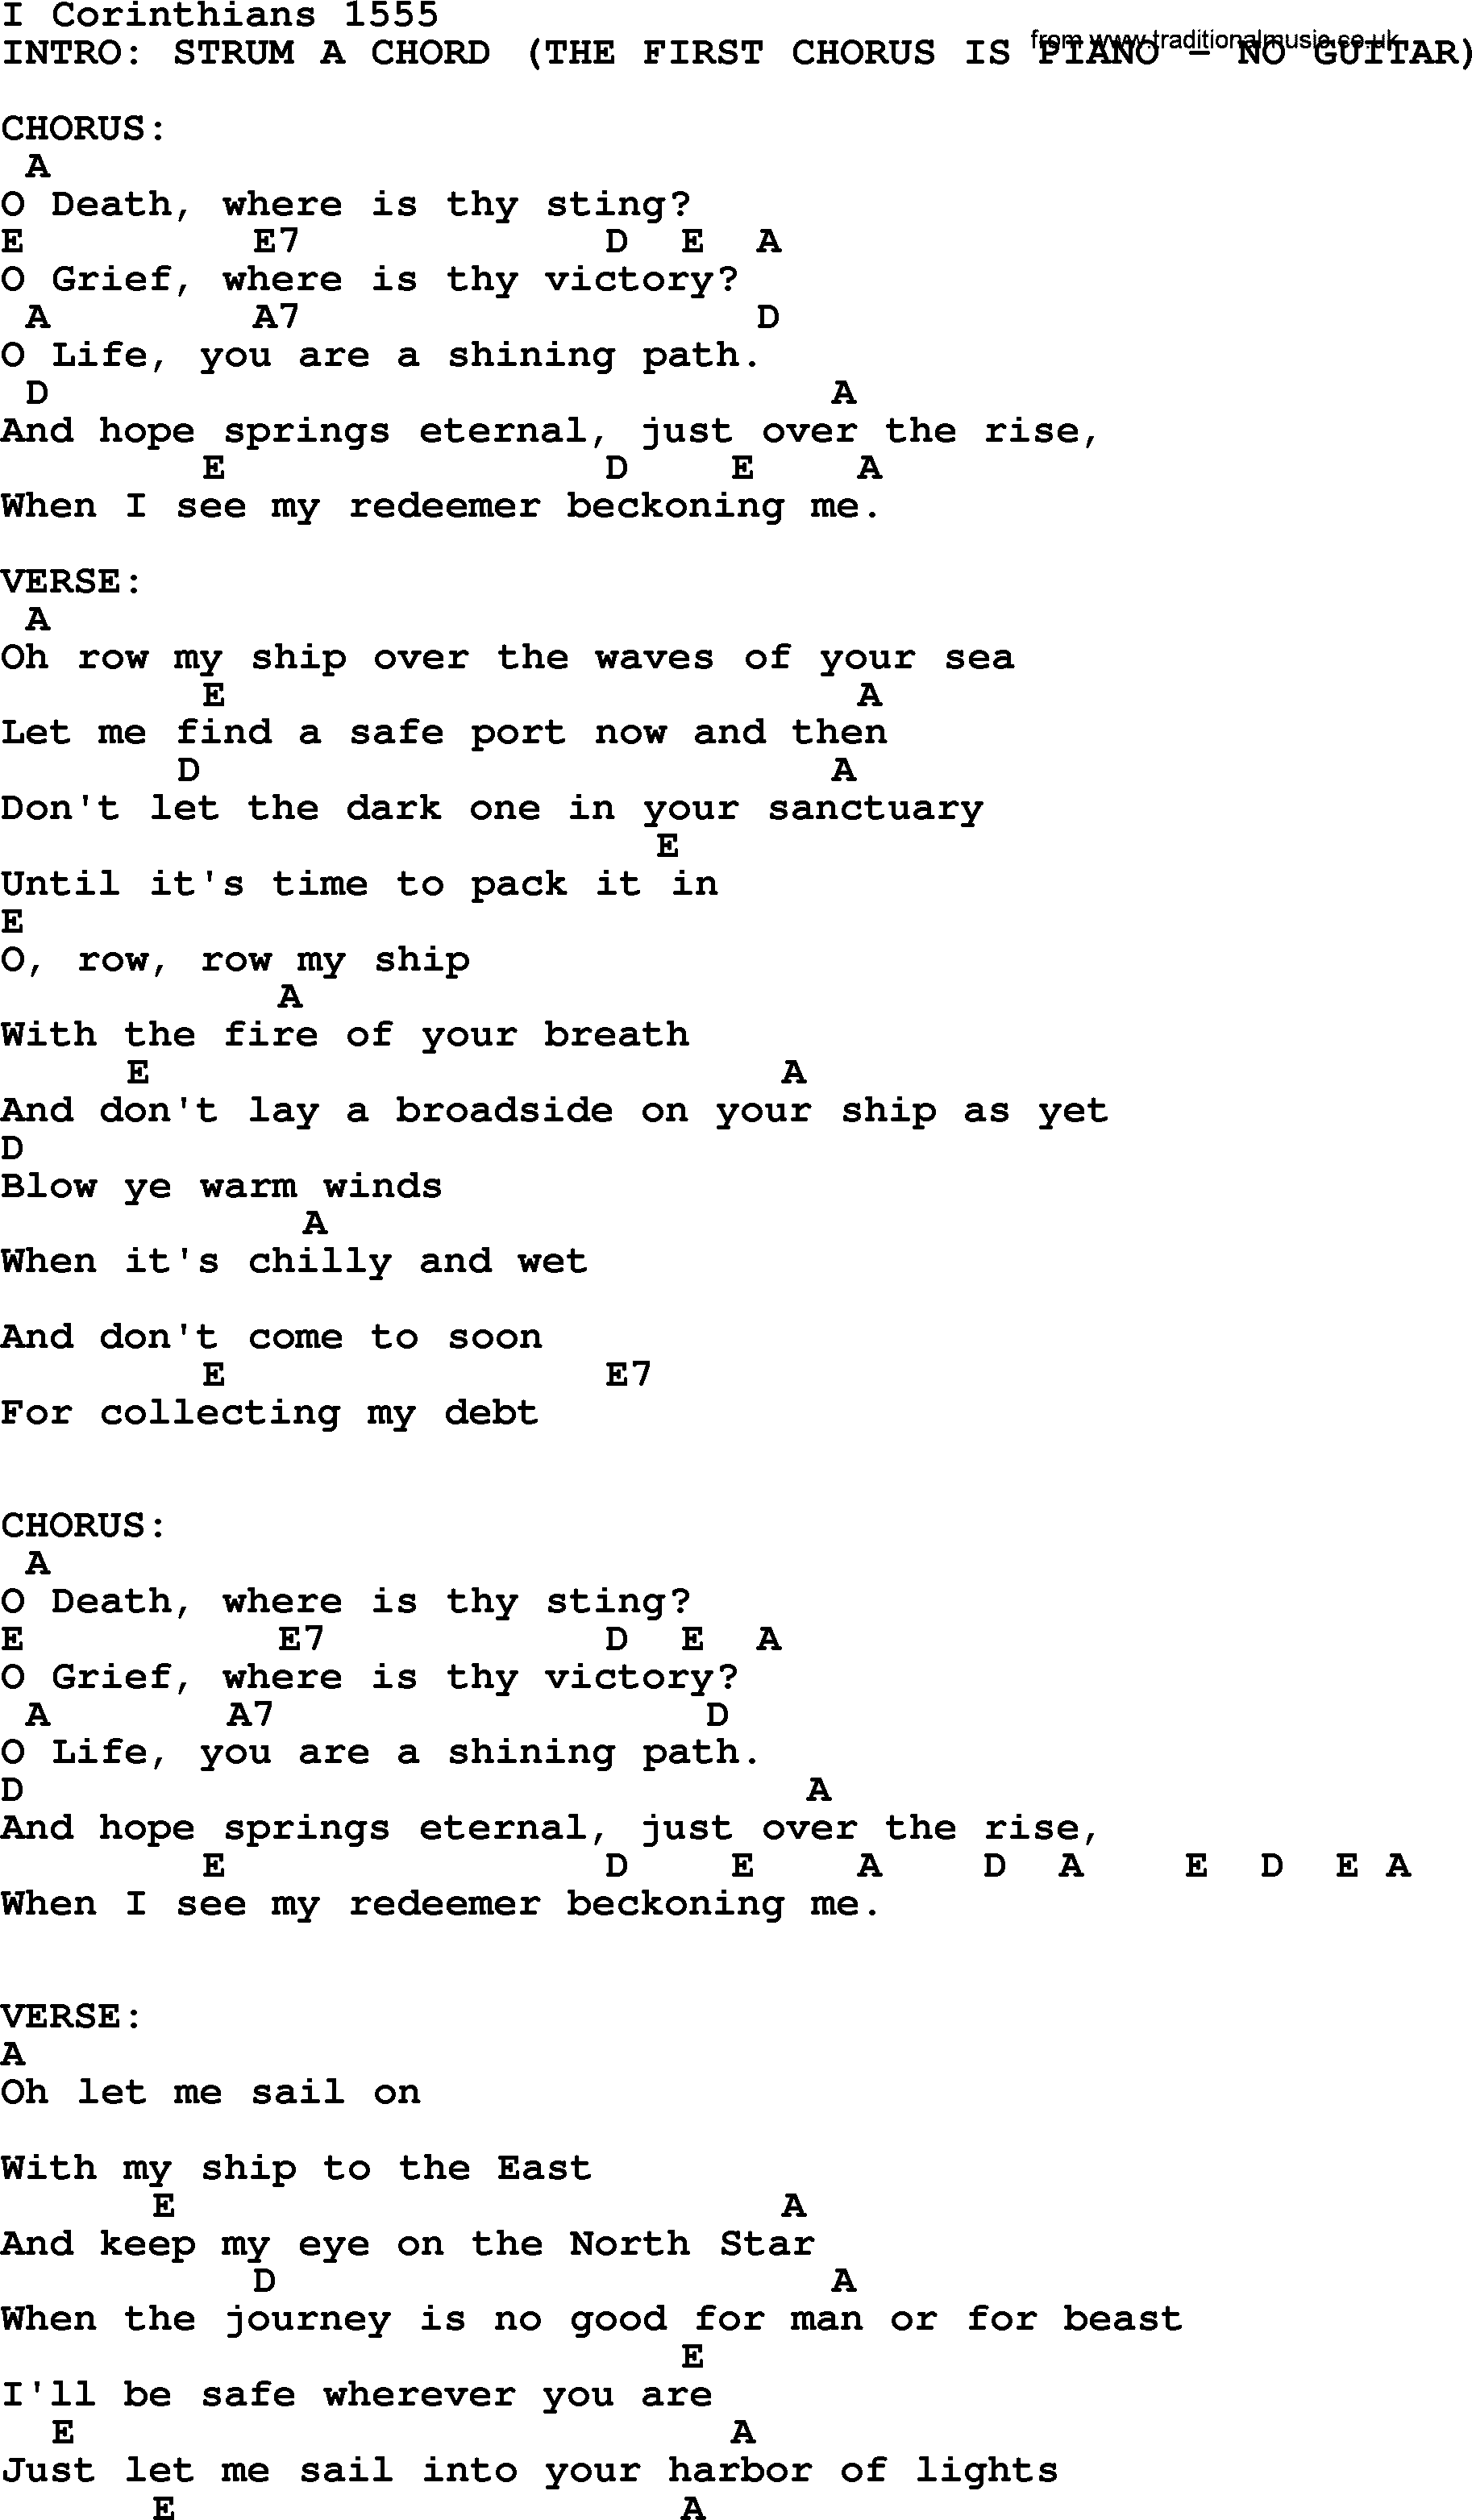 Johnny Cash song I Corinthians 15-55, lyrics and chords